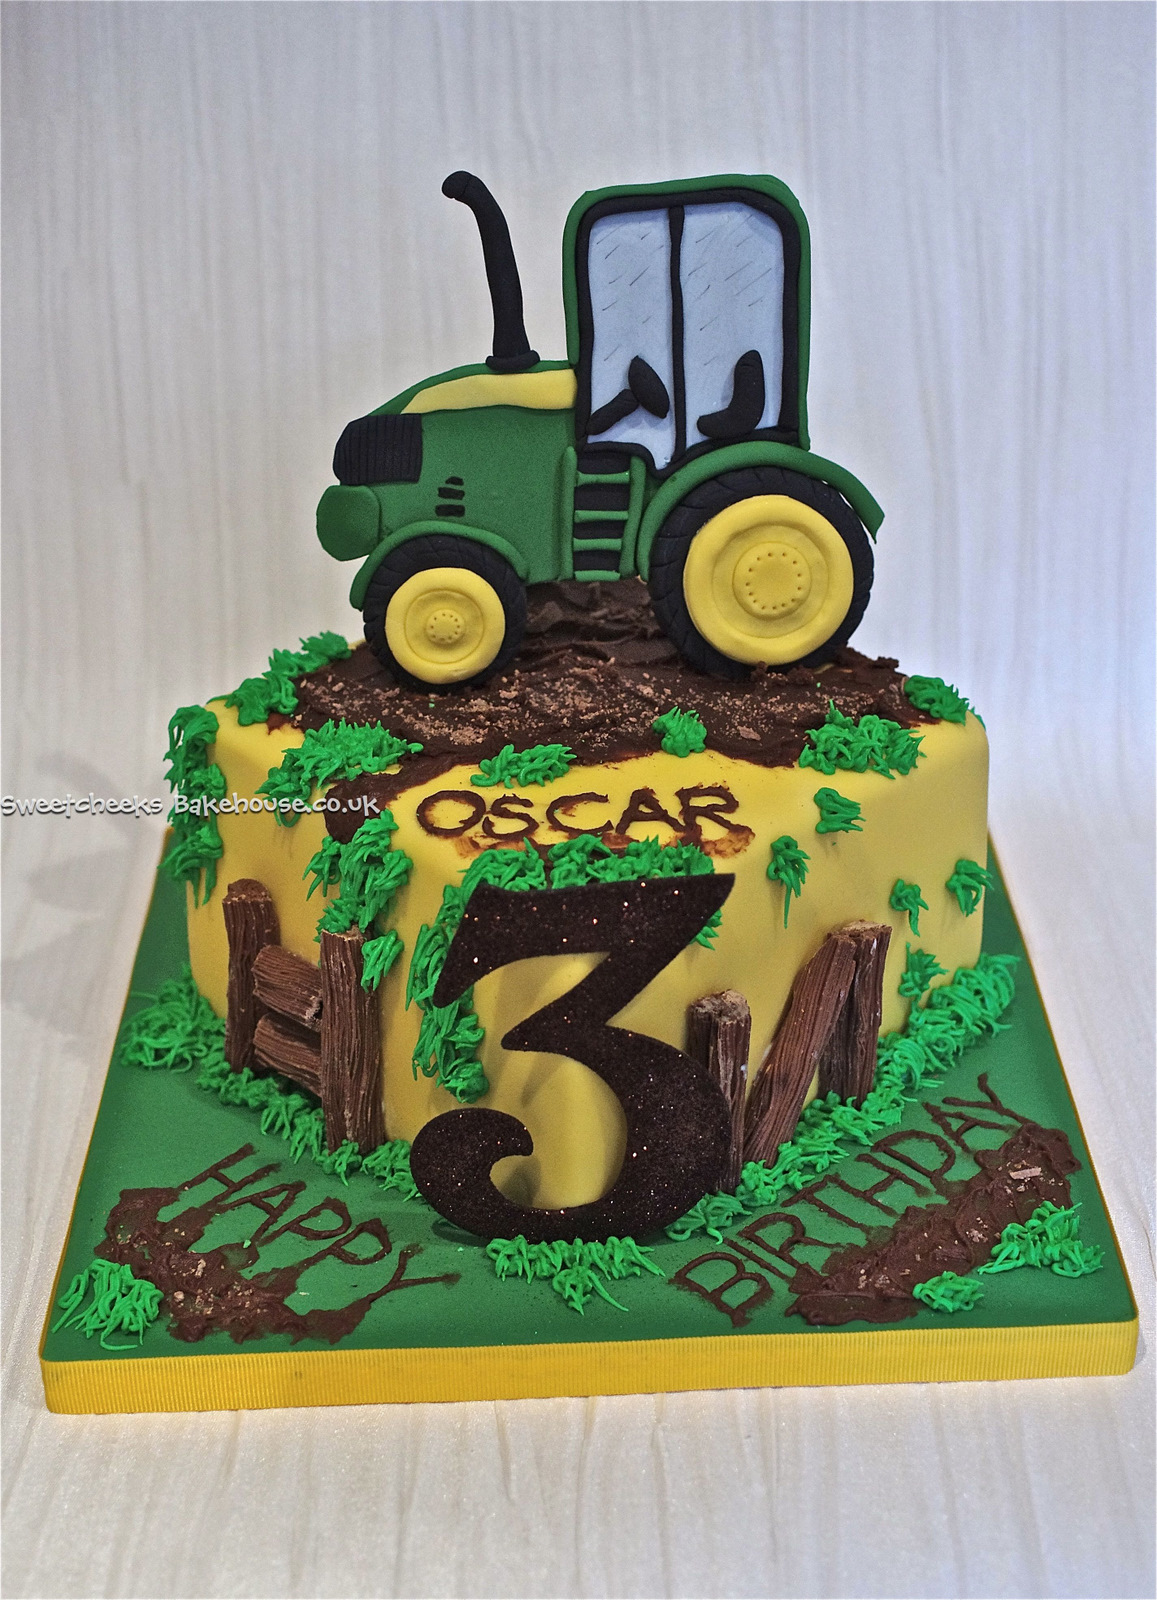 John Deere tractor cake - Sweetcheeks Bakehouse | Sweetcheeks ...